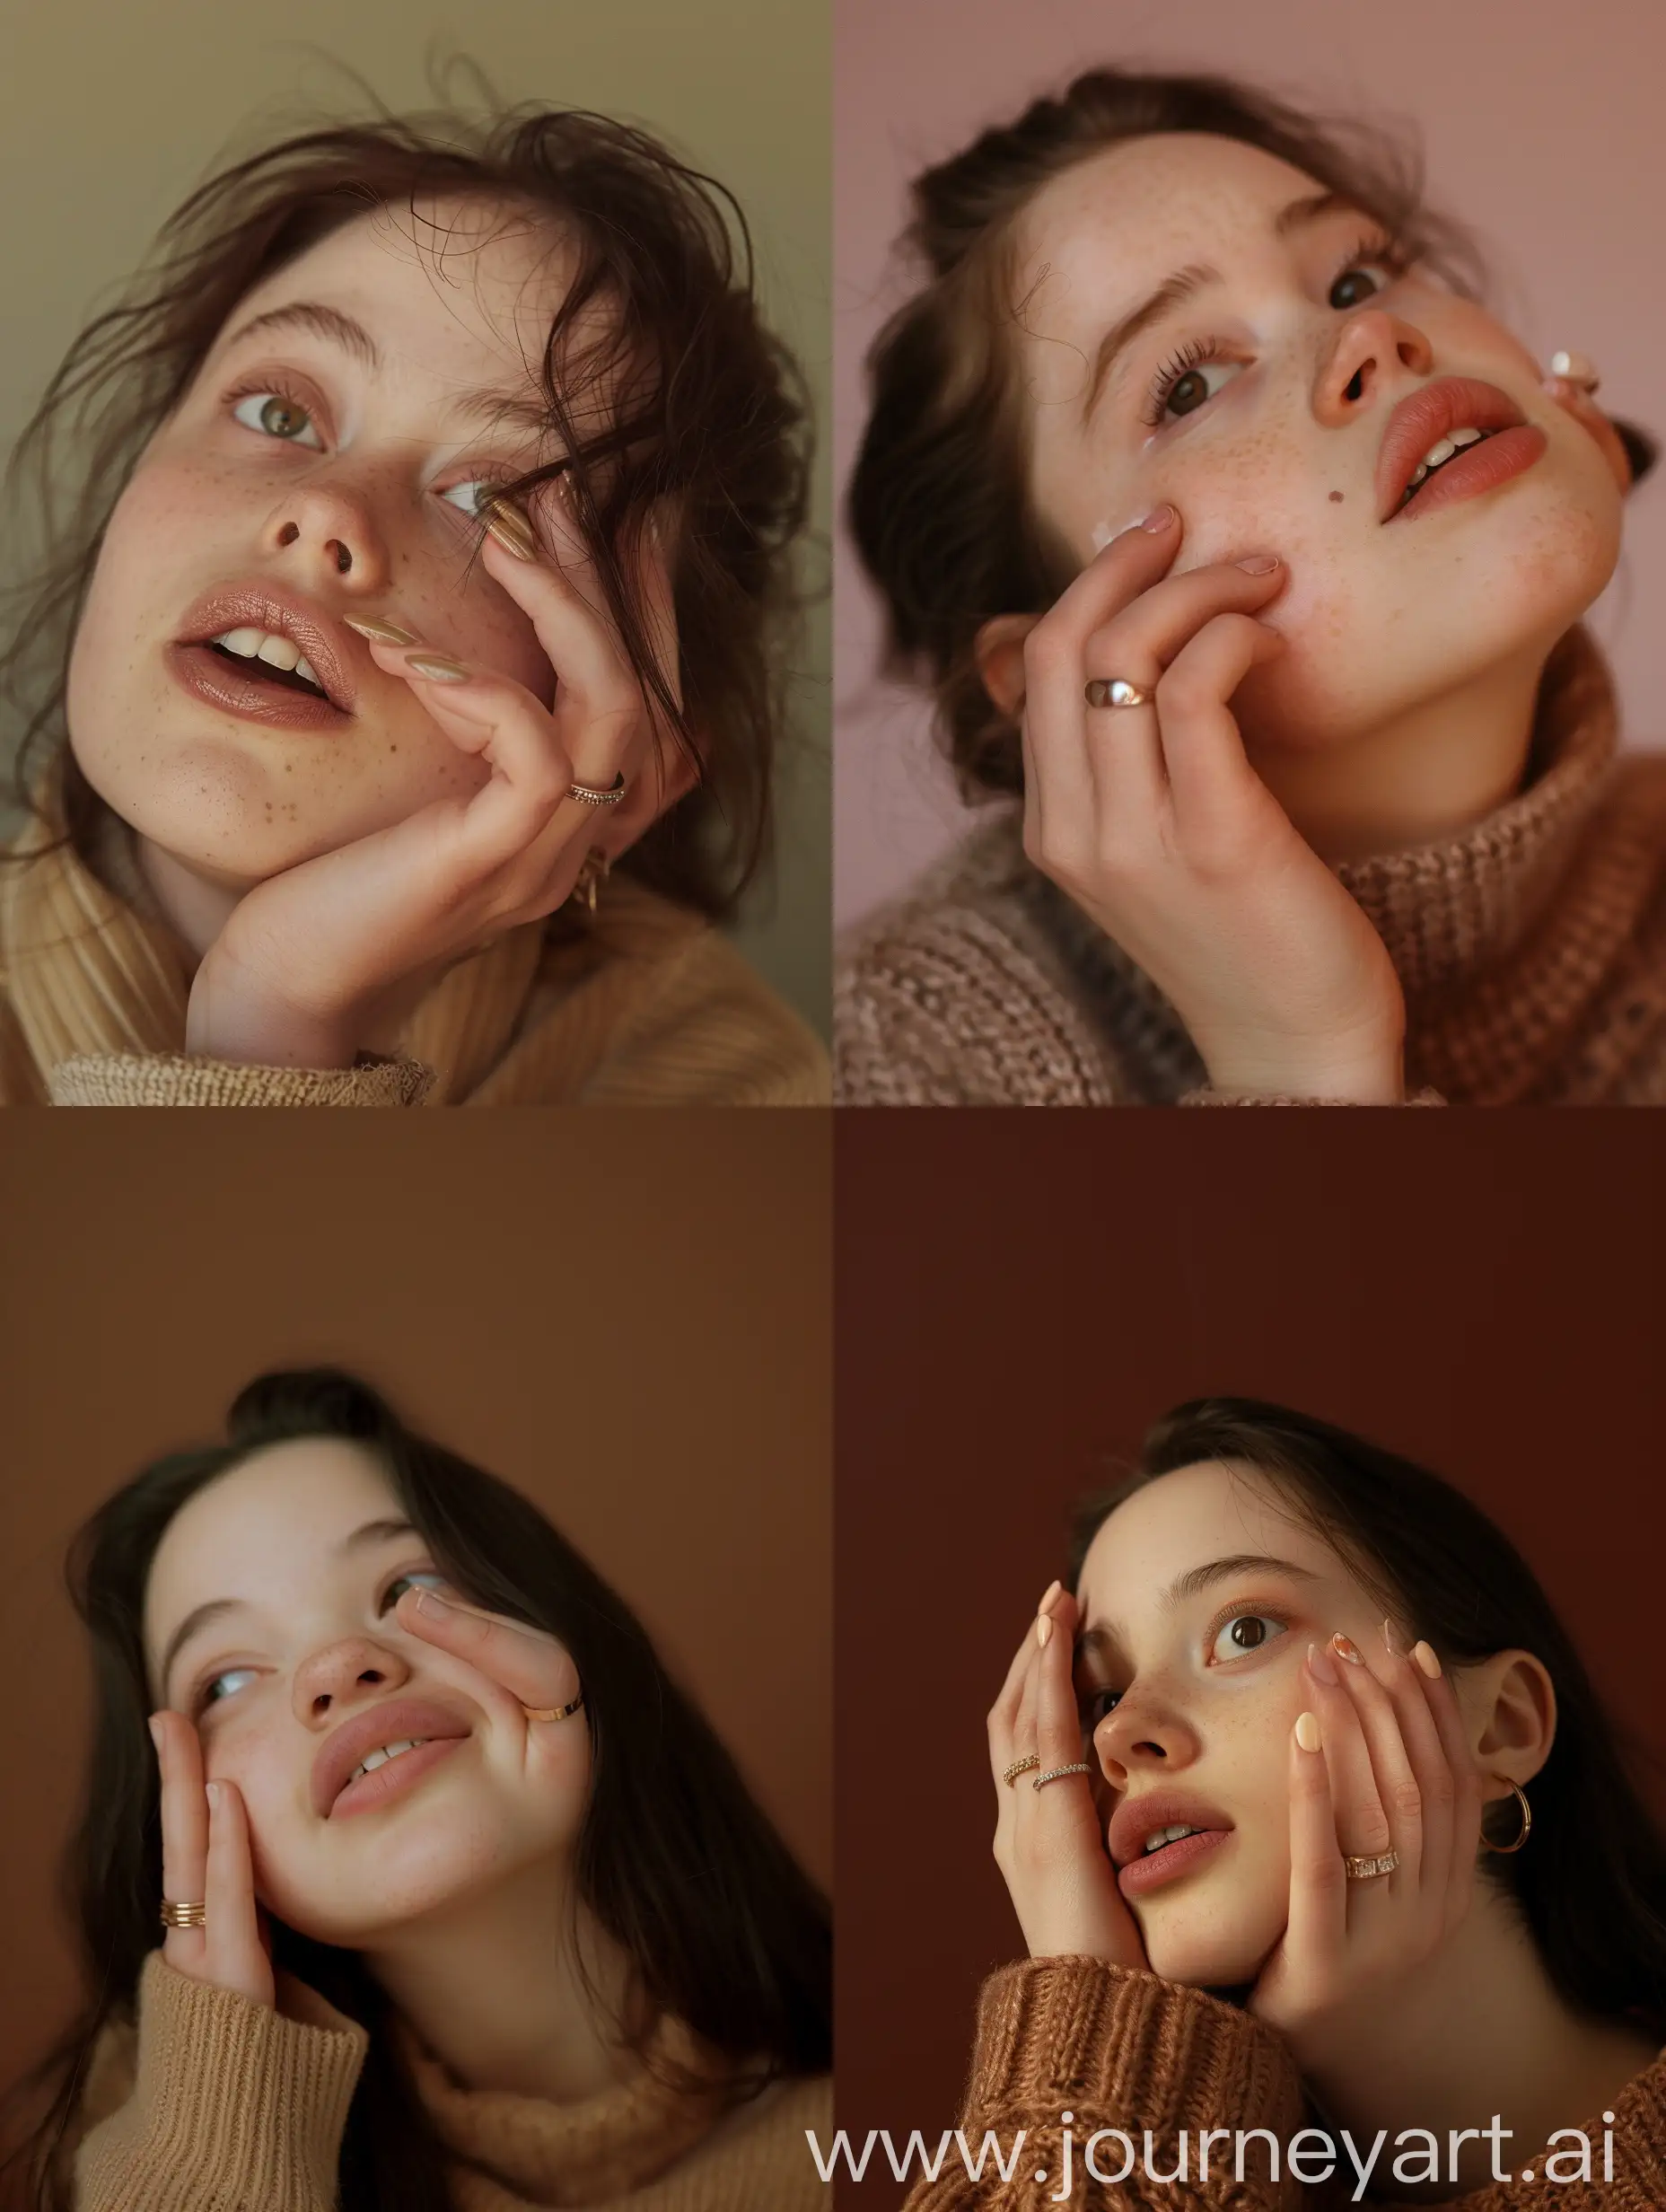 Teenage-Super-Model-Girl-with-Down-Syndrome-Aesthetic-Instagram-Selfie-in-Warm-Brown-Tones